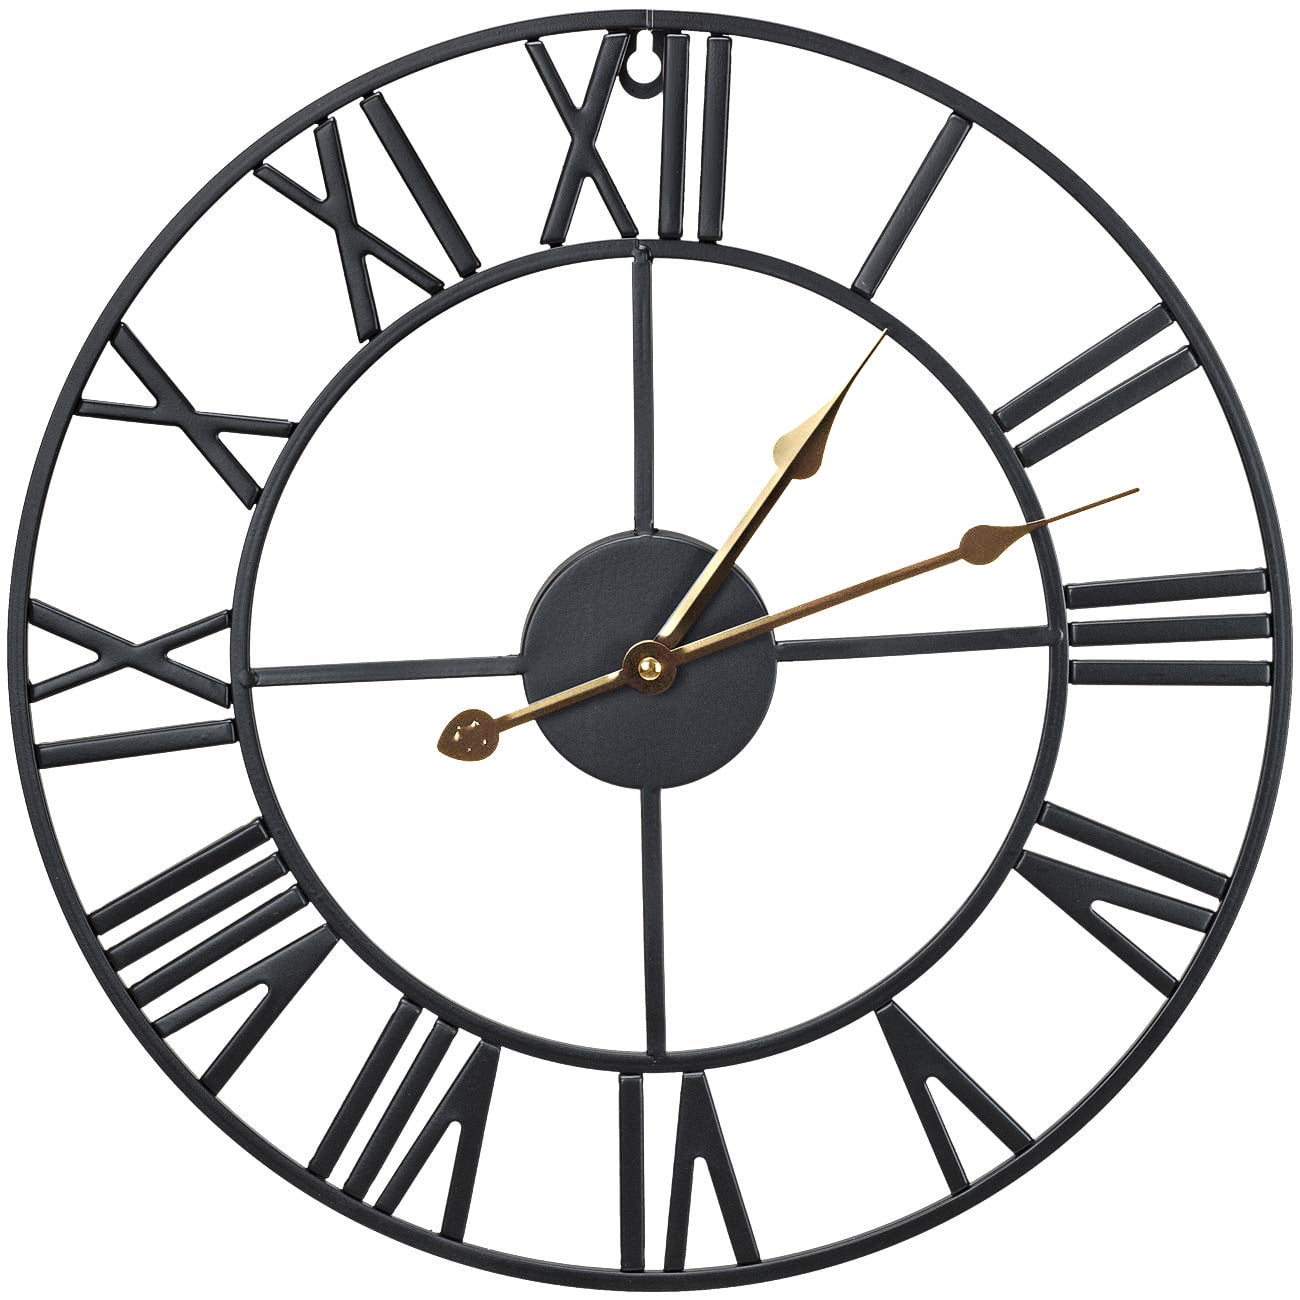 78cm Large Vintage Metal Wall Clock Indoor Outdoor Roman Numeral Black Clock 